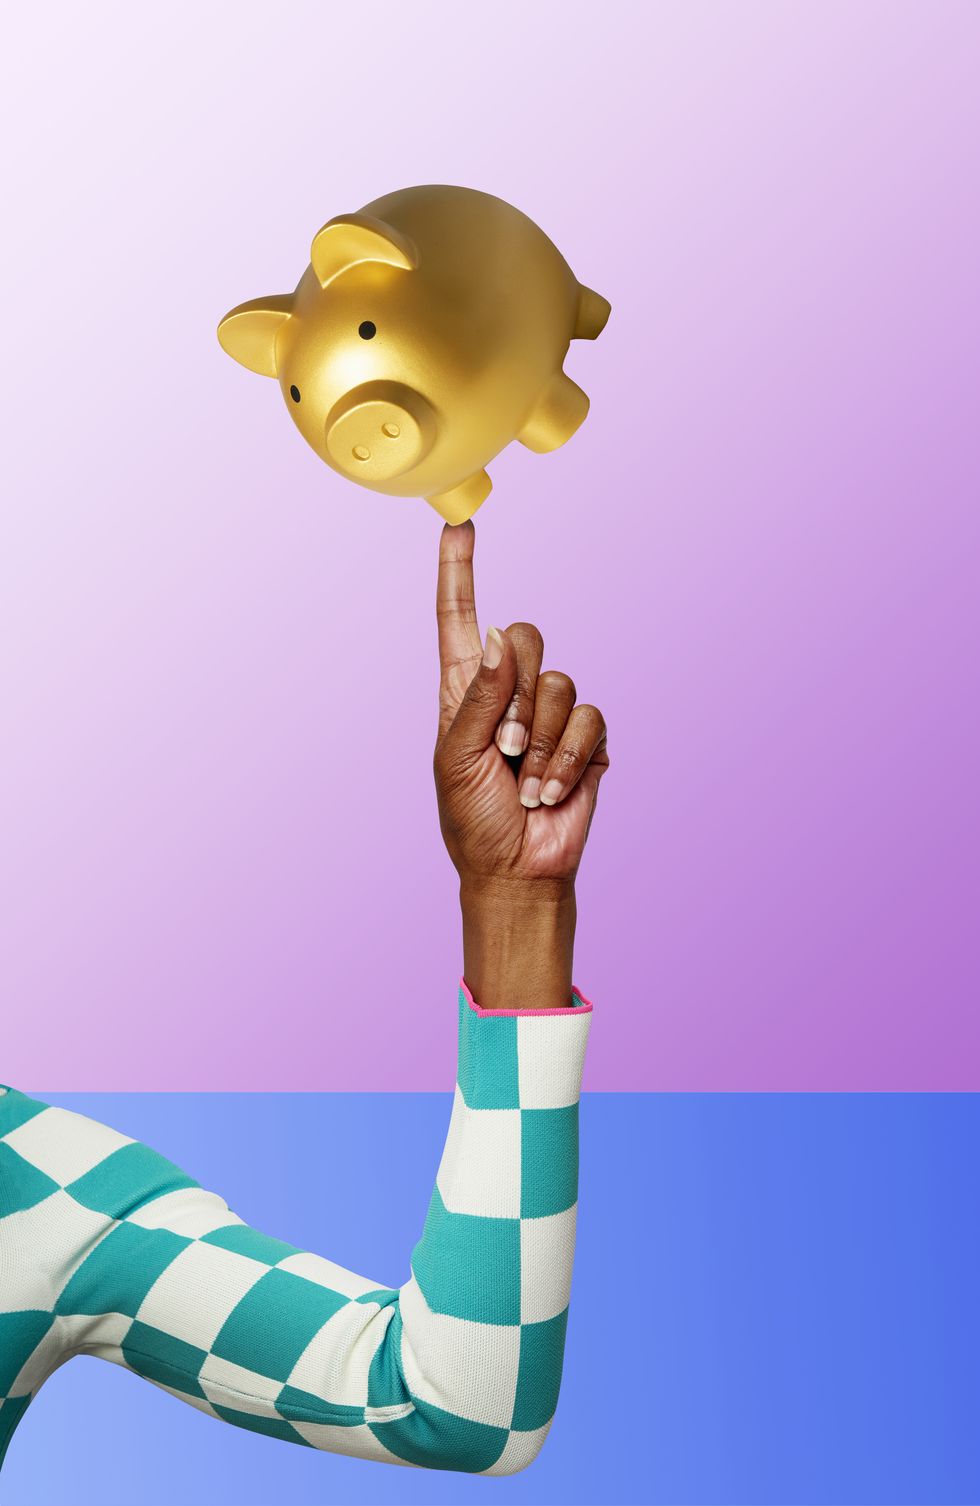 piggy bank balancing on finger